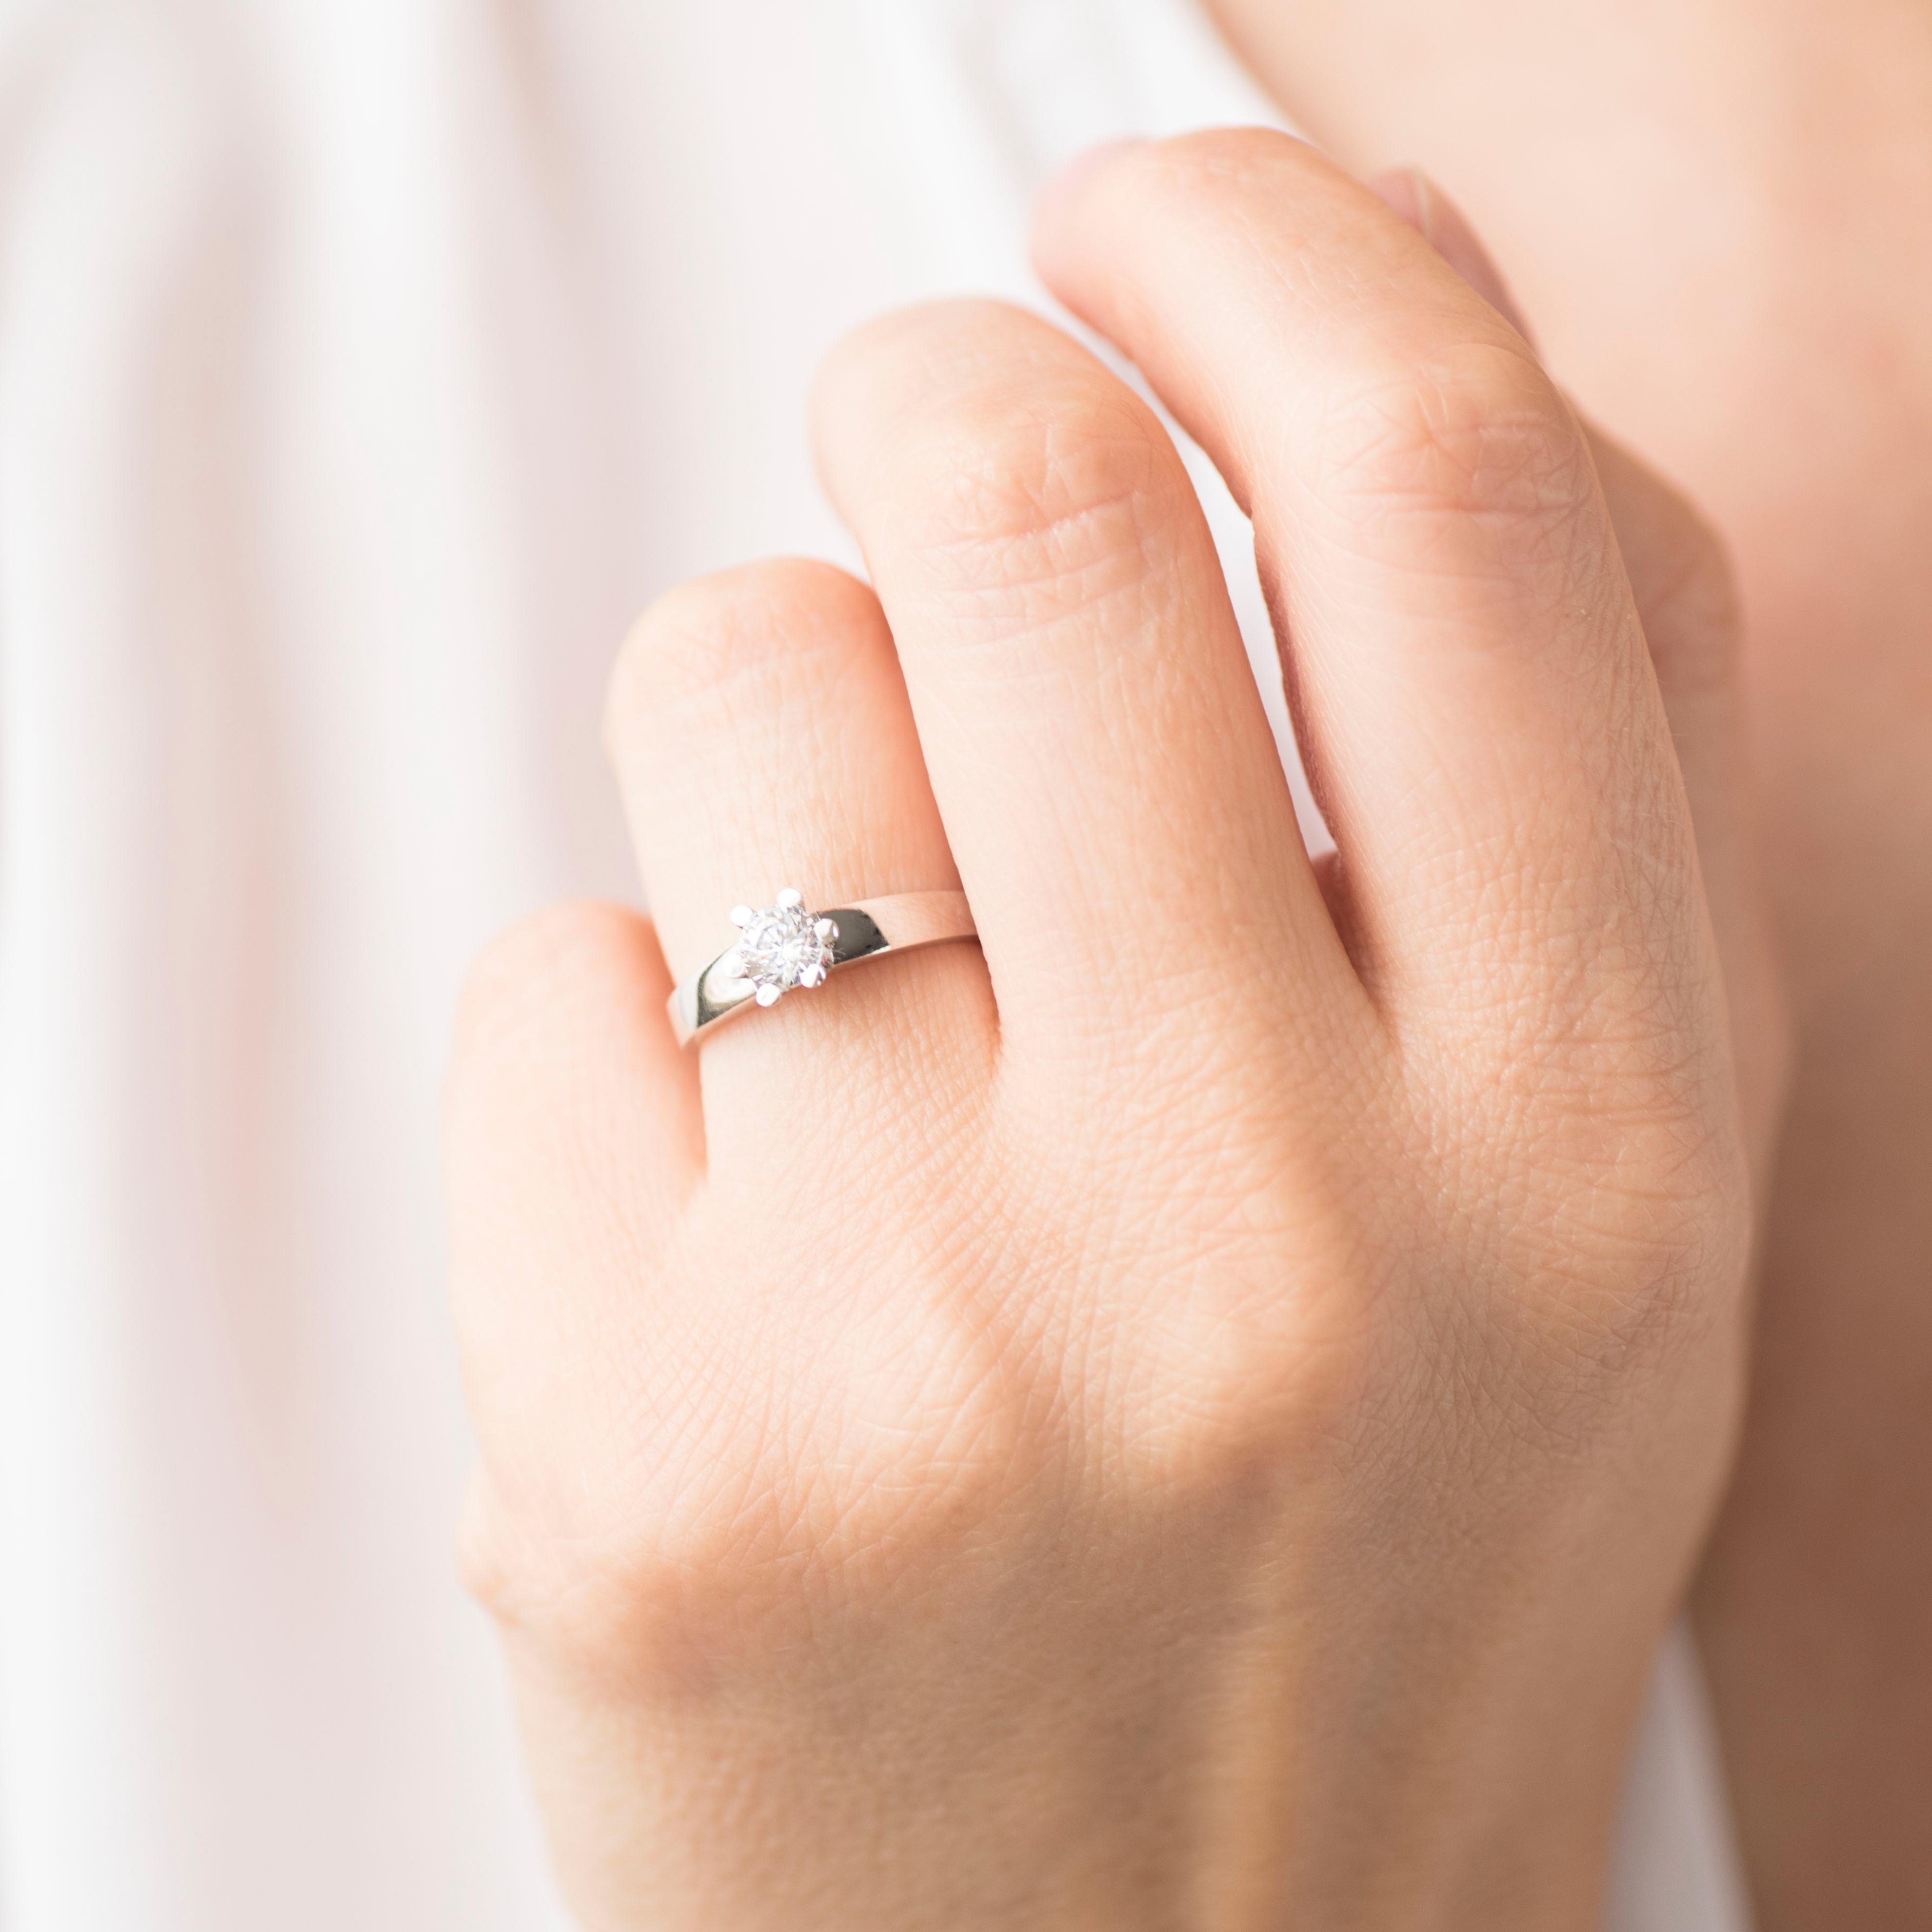 Кольцо для помолвки на руке